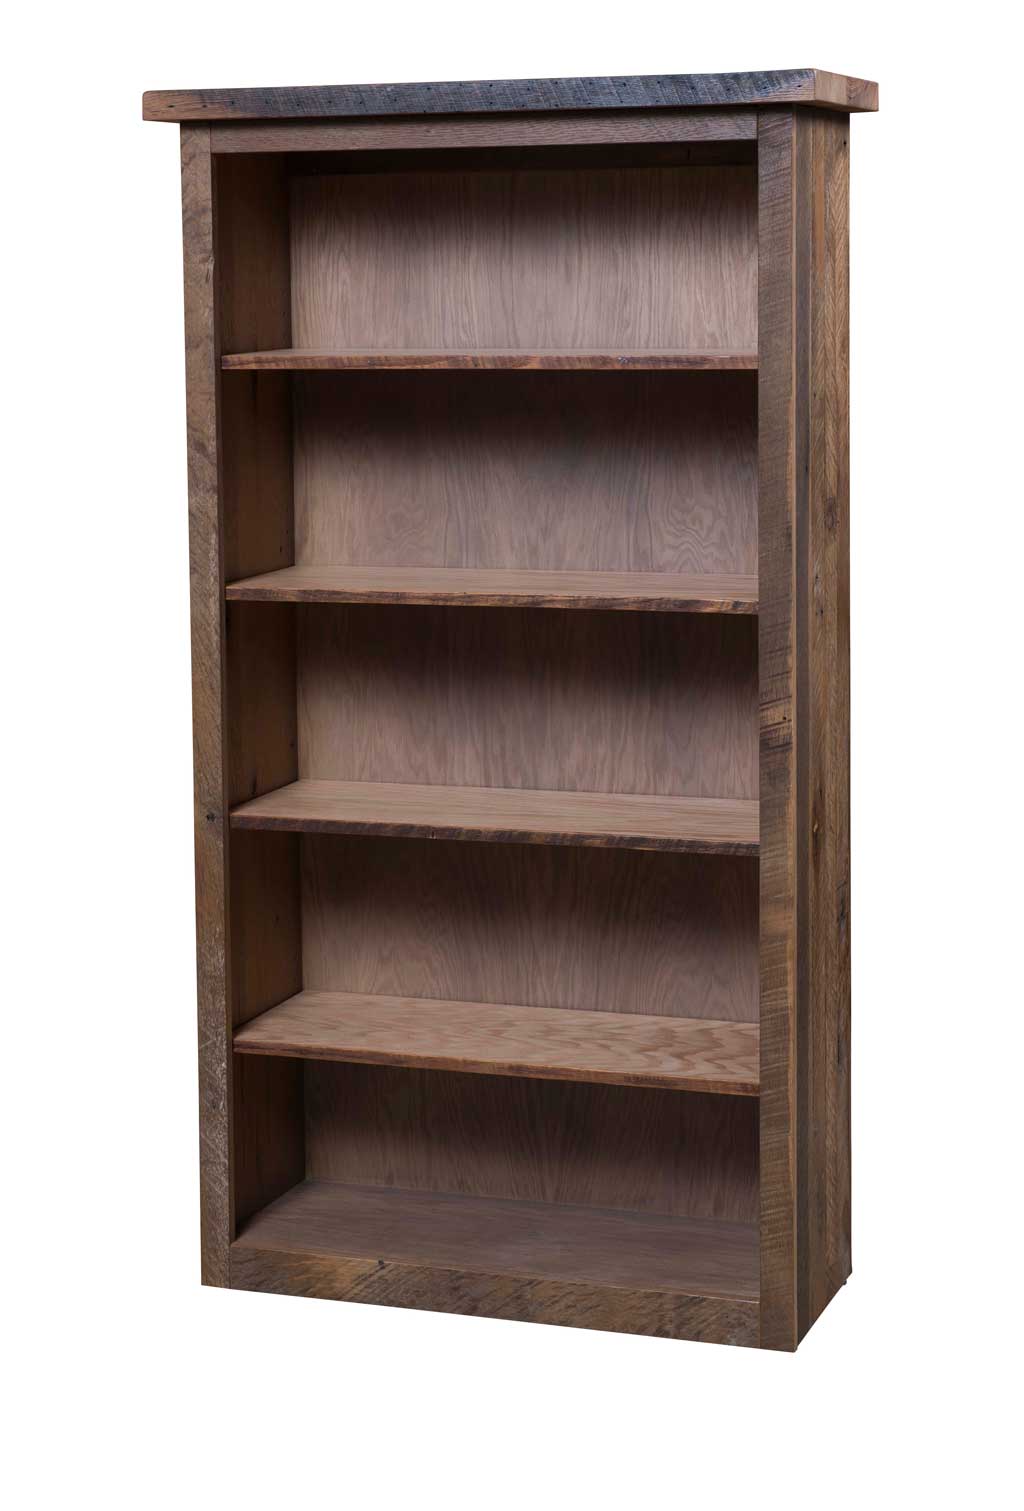 Barnwood Book Shelf Industrial Craftsman